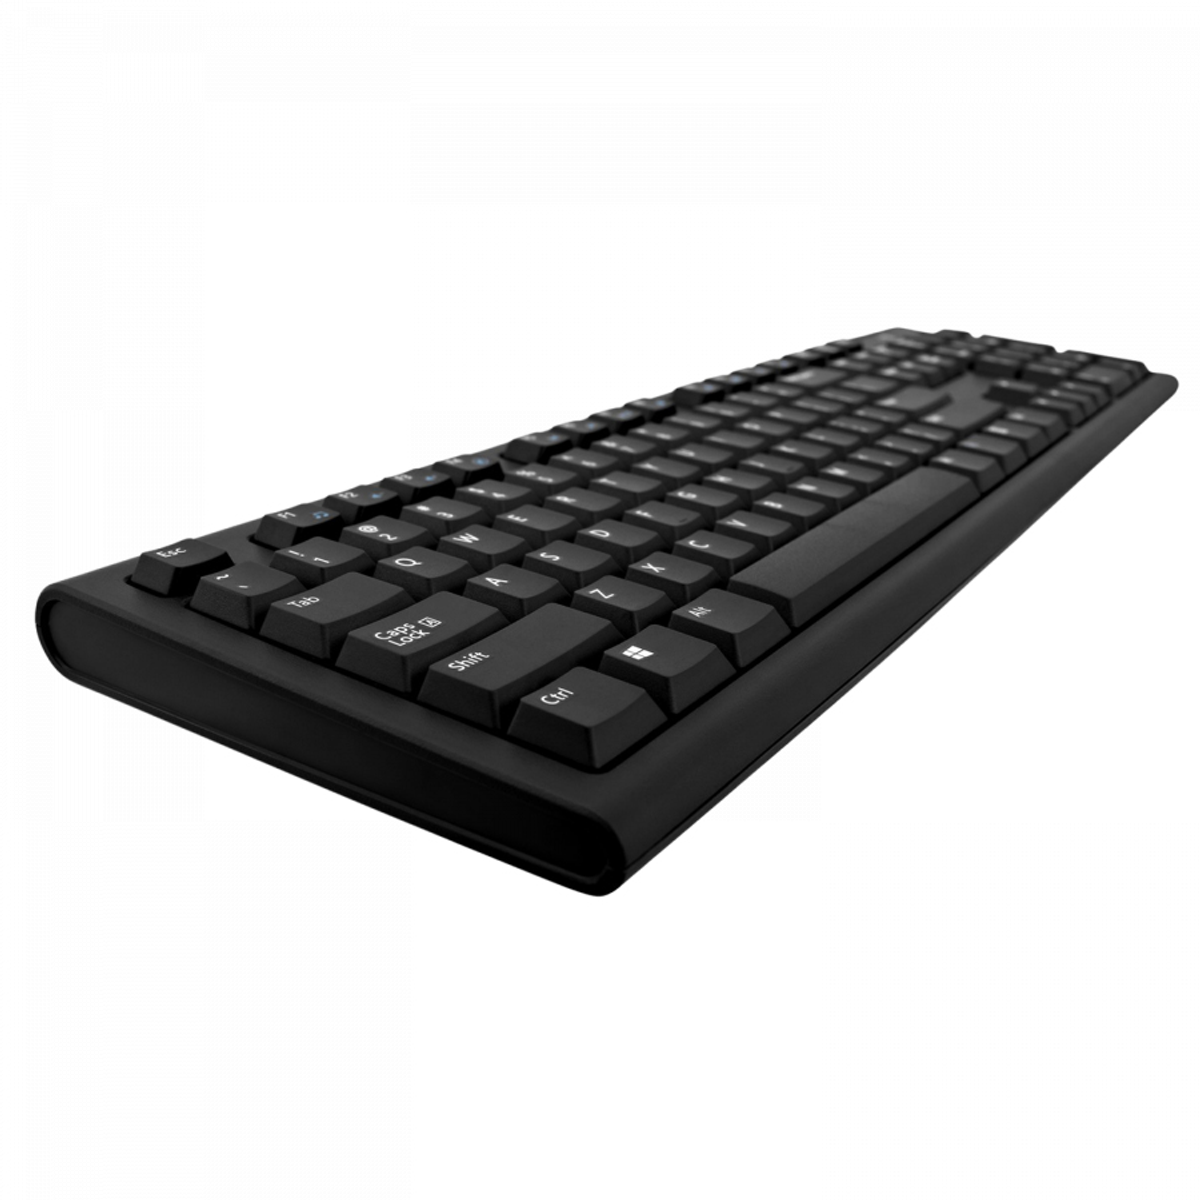 Schwarz Maus Tastatur Set, V7 CKW200DE,